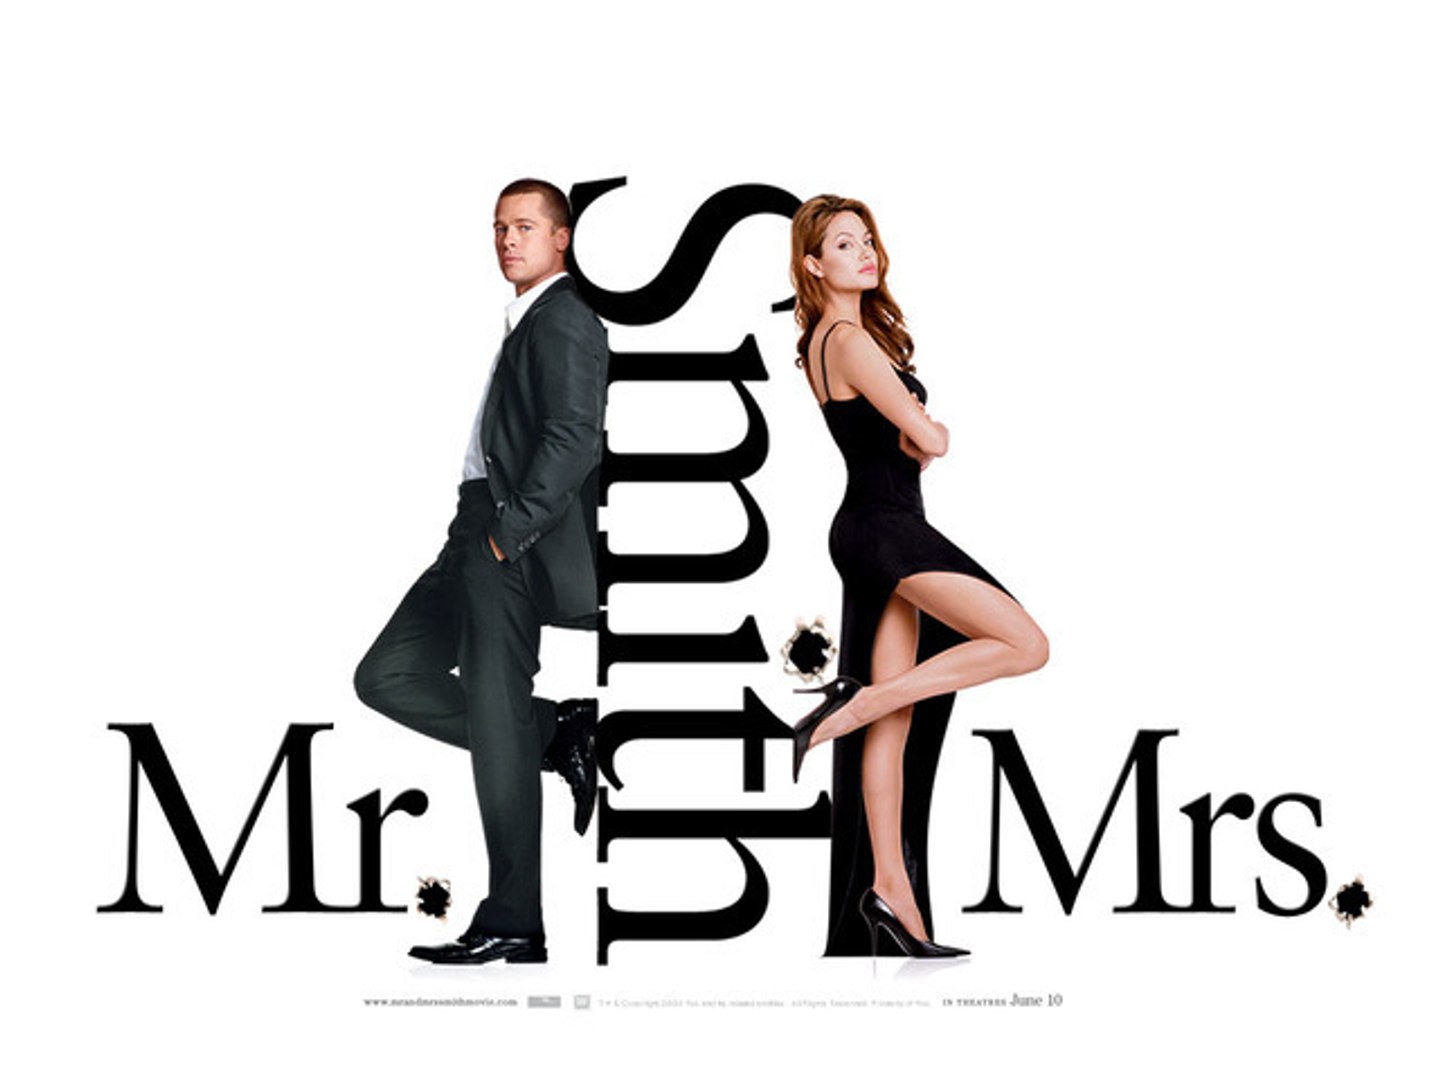 Mr ms mrs. Мистер и миссис Смит (2005) Mr. & Mrs. Smith. Анджелина Джоли 2005 Мистер и миссис Смит.